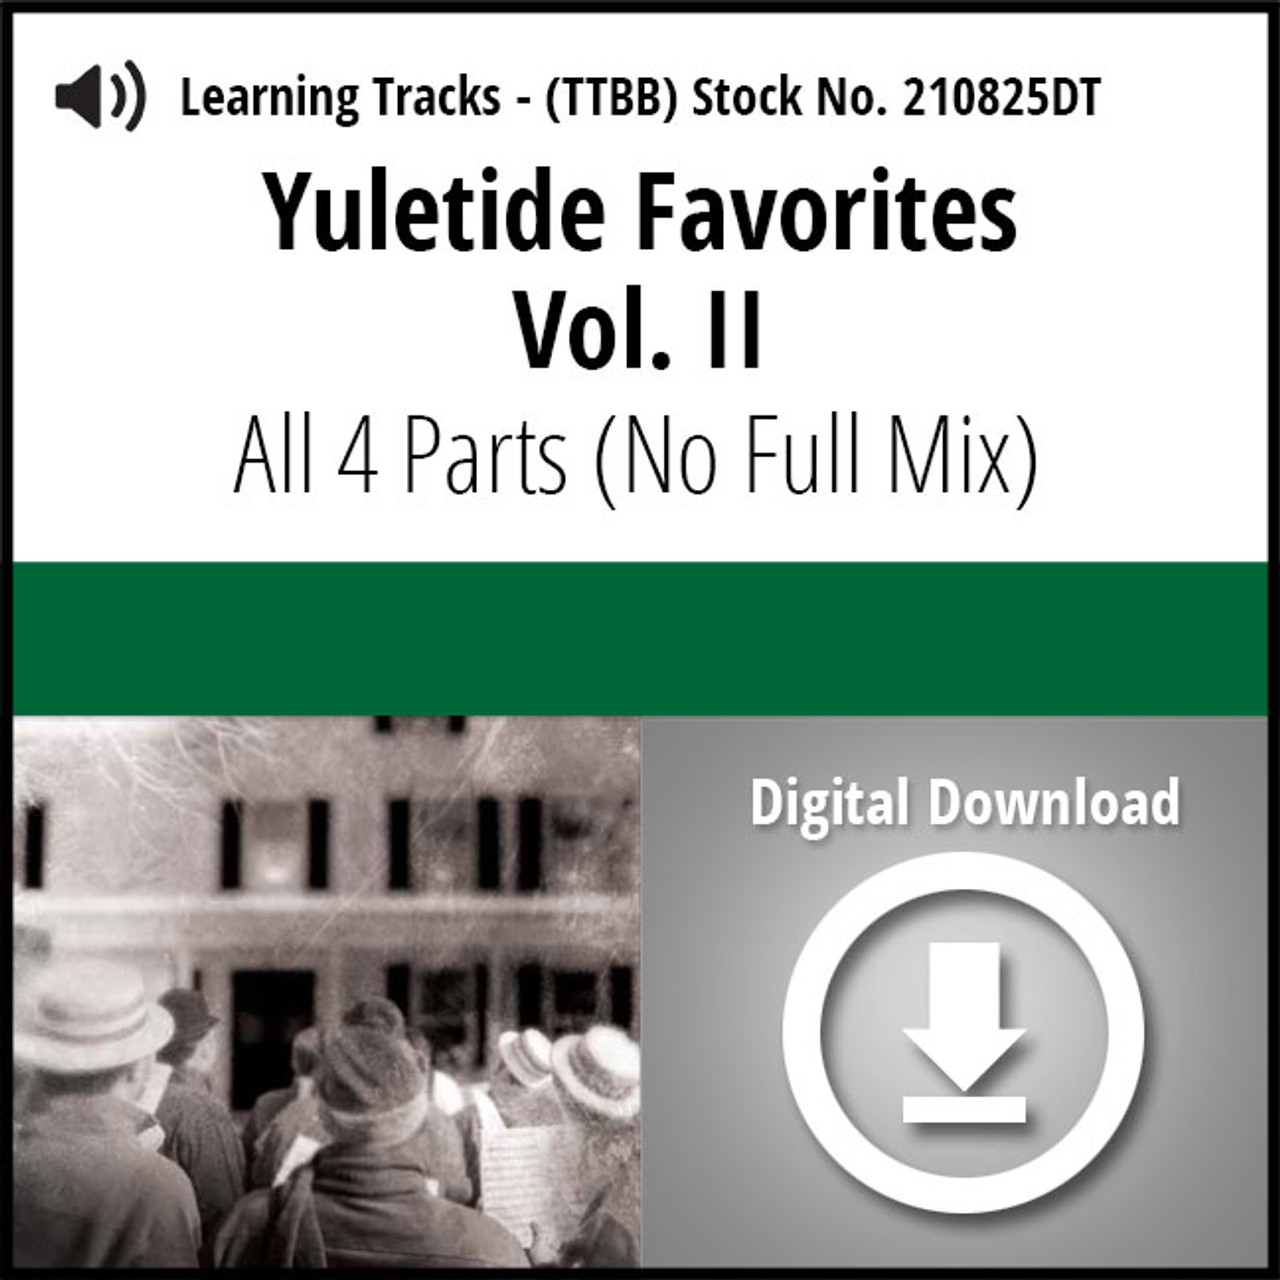 Yuletide Favorites Vol. II (All 4 Parts) (No Full Mix) - Digital Learning Tracks for 210494